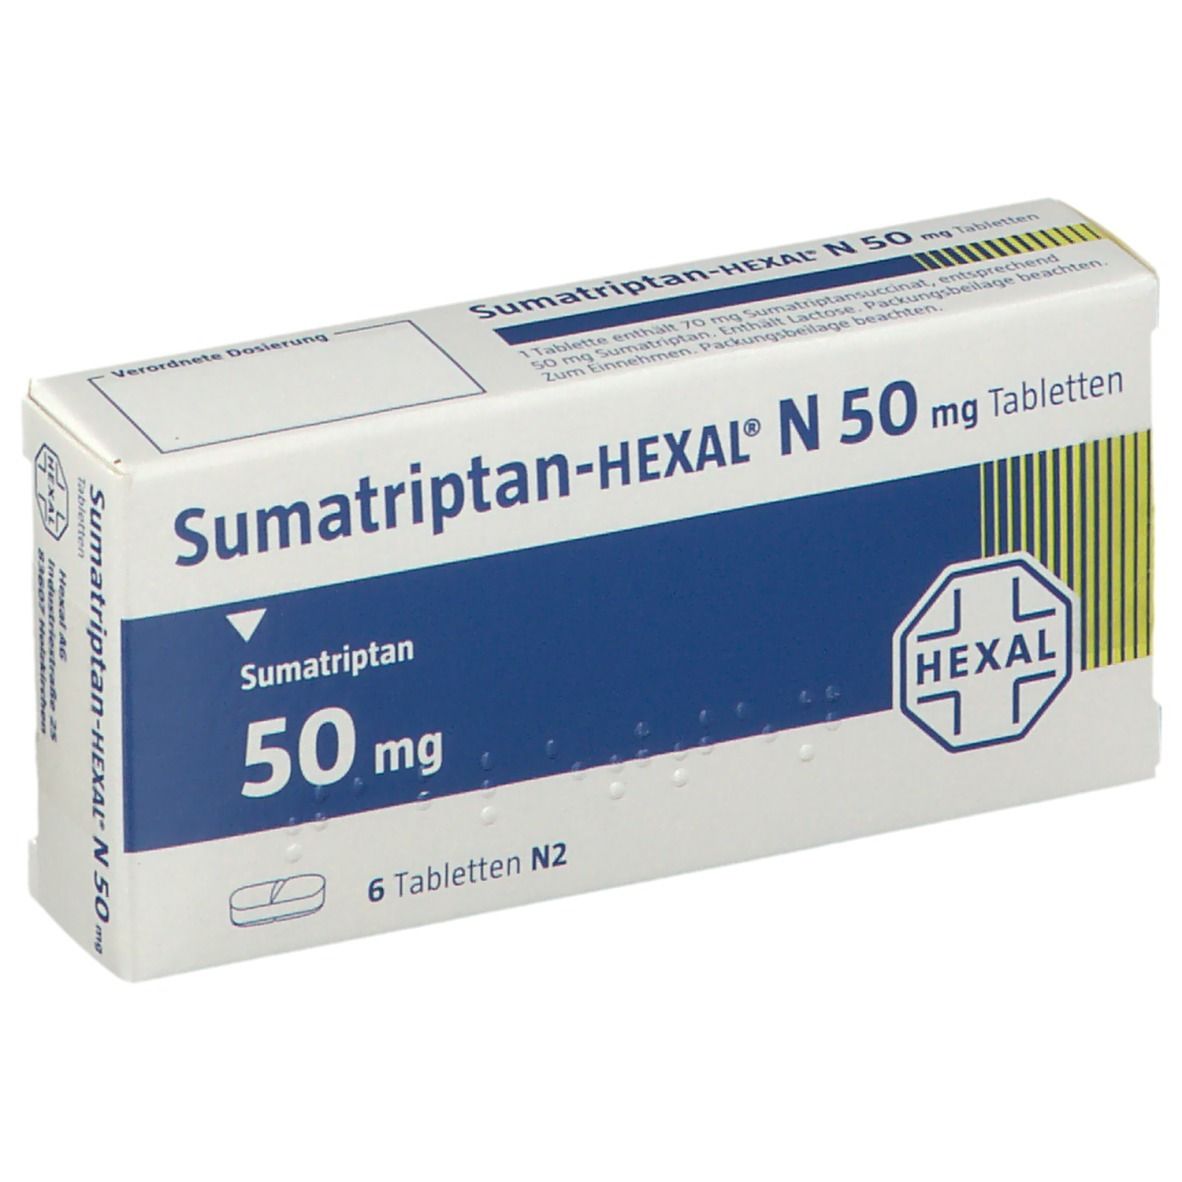 Sumatriptan-HEXAL® N 50 mg